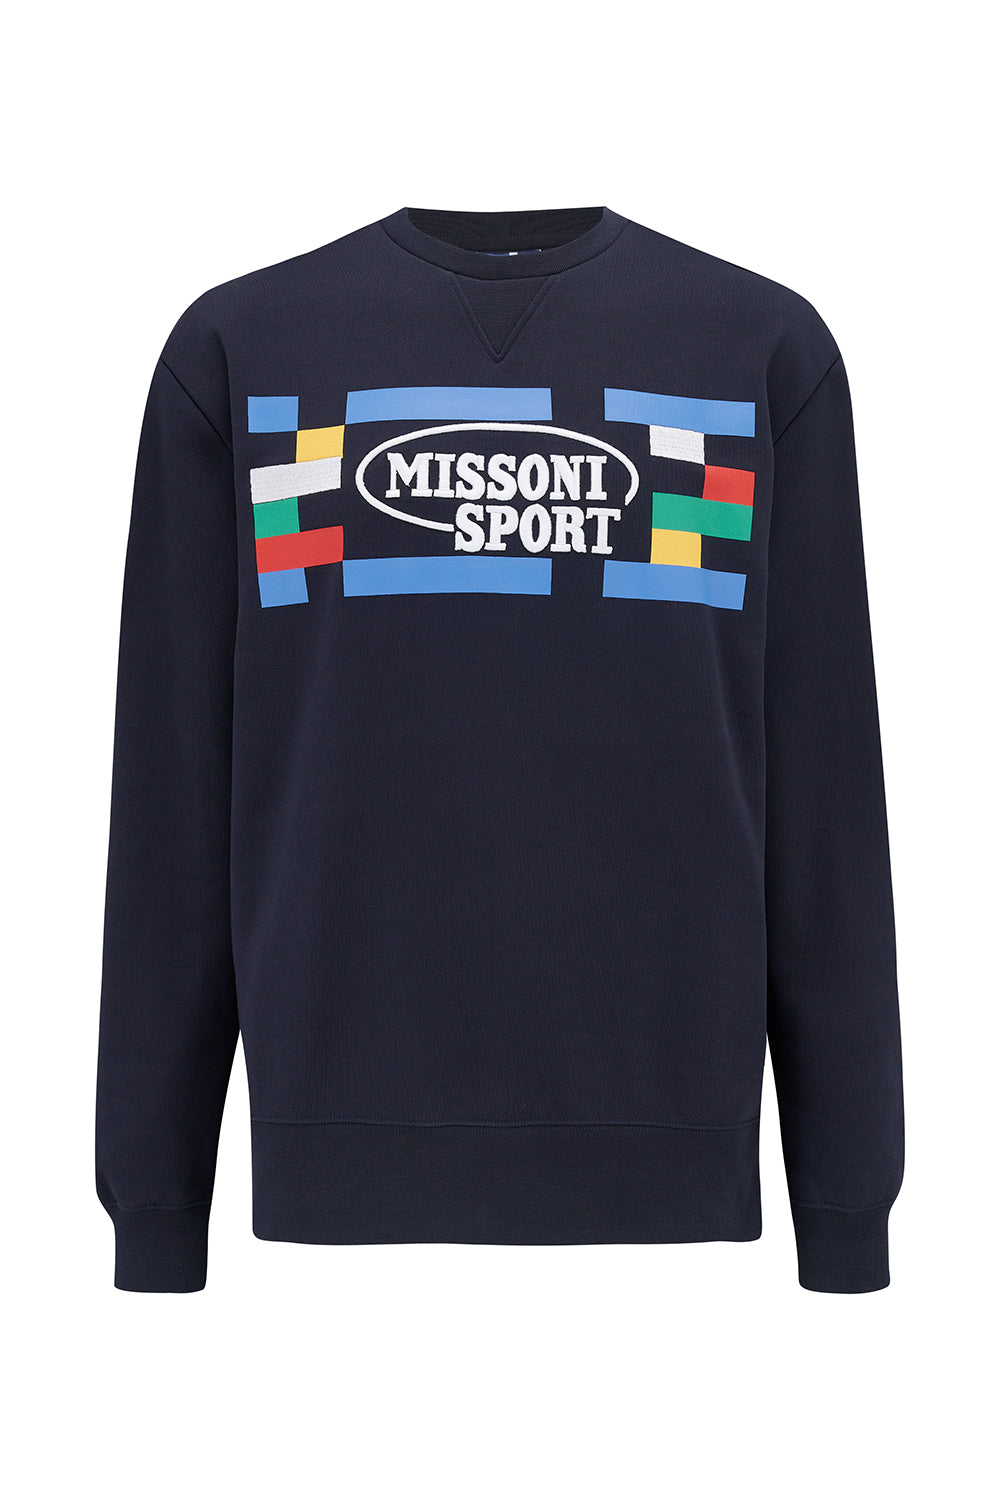 Missoni Men’s Cotton Sweater Navy - Front View